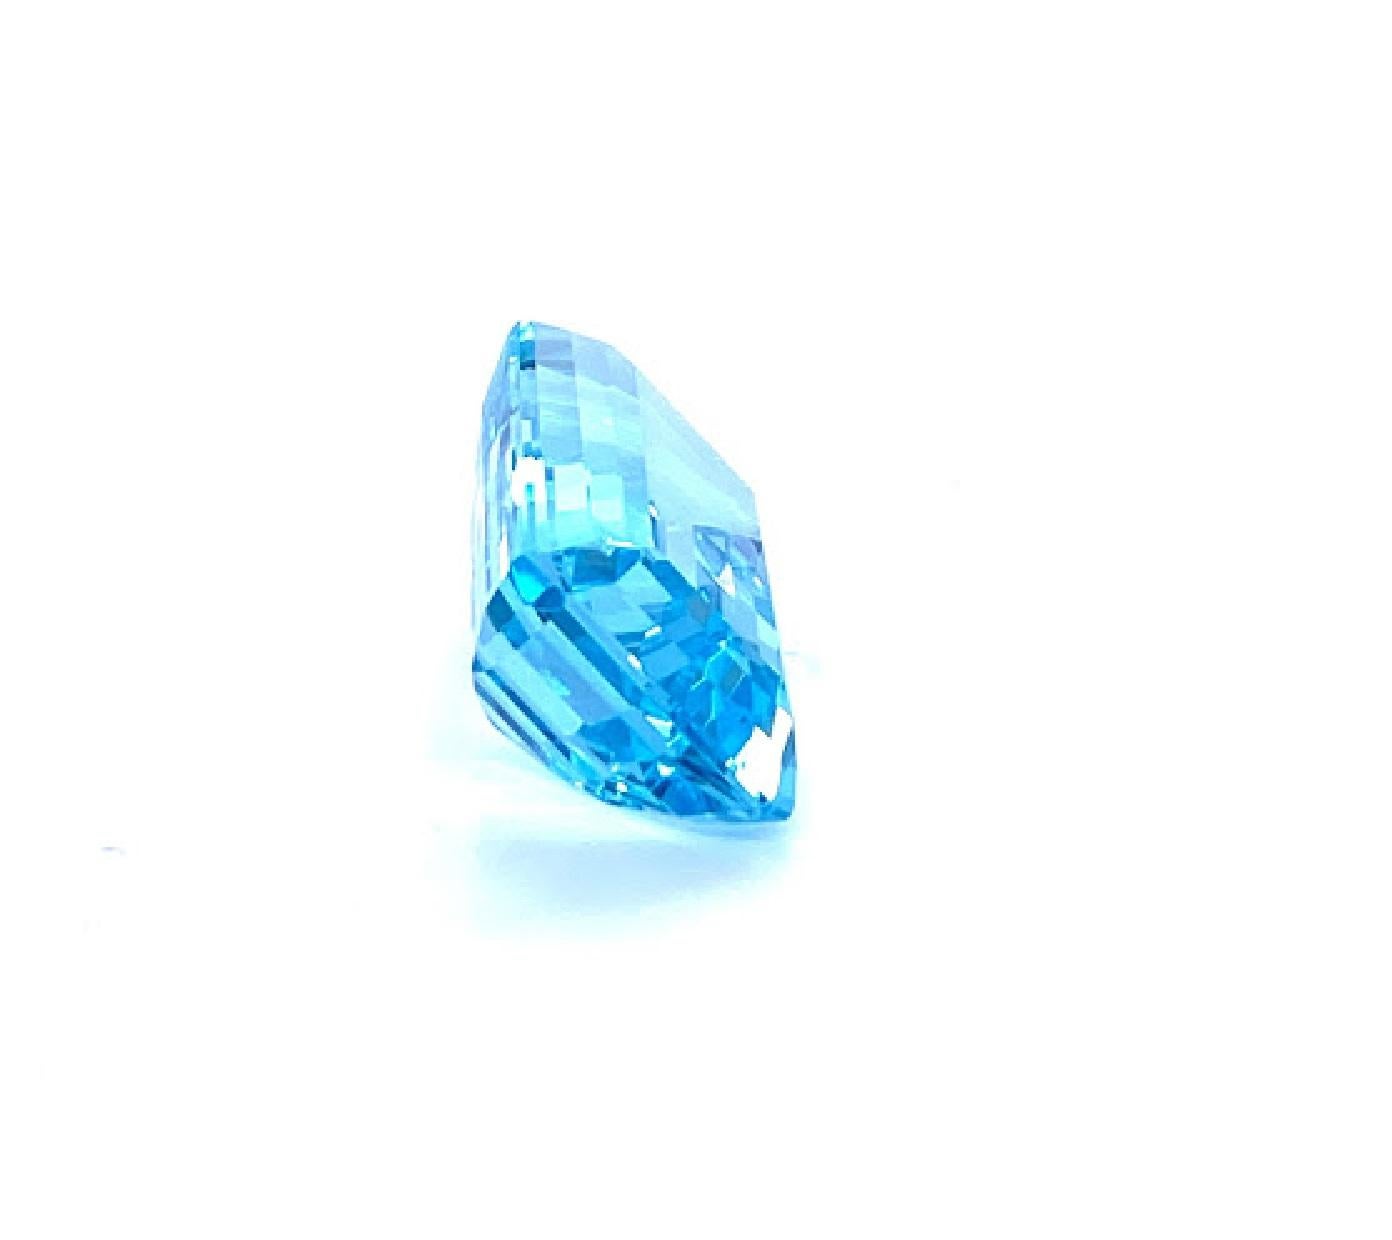 Emerald cut aquamarine measuring 17.36 x 11.15 x 8.13 mm.  12.24 carat total.